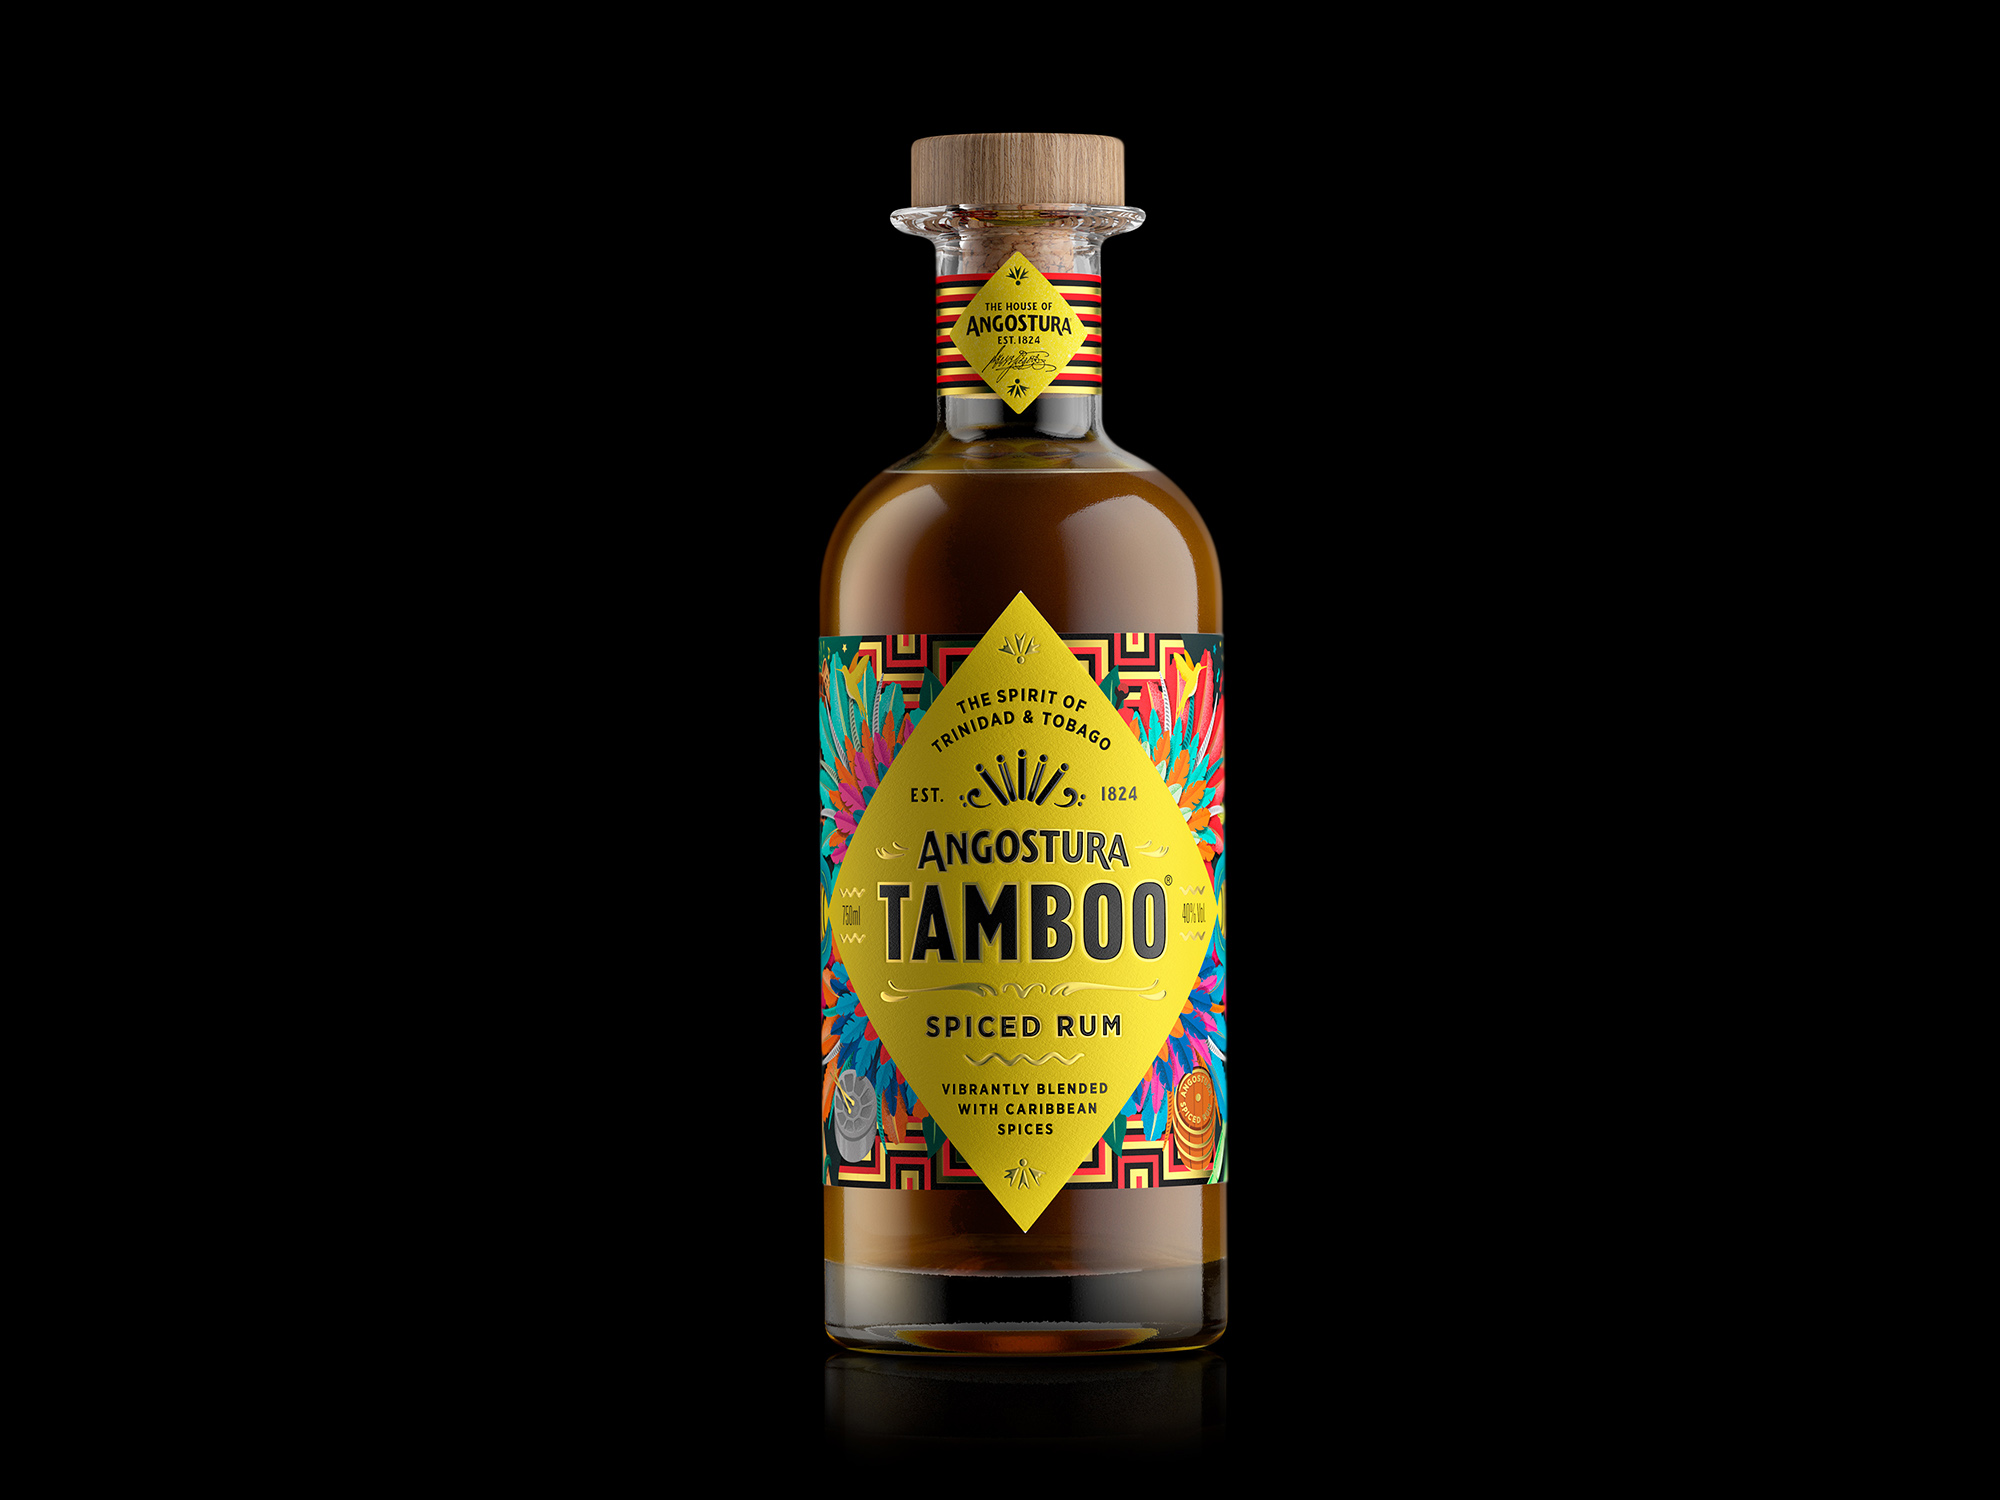 Angostura Tamboo Spiced Rum Packaging Design